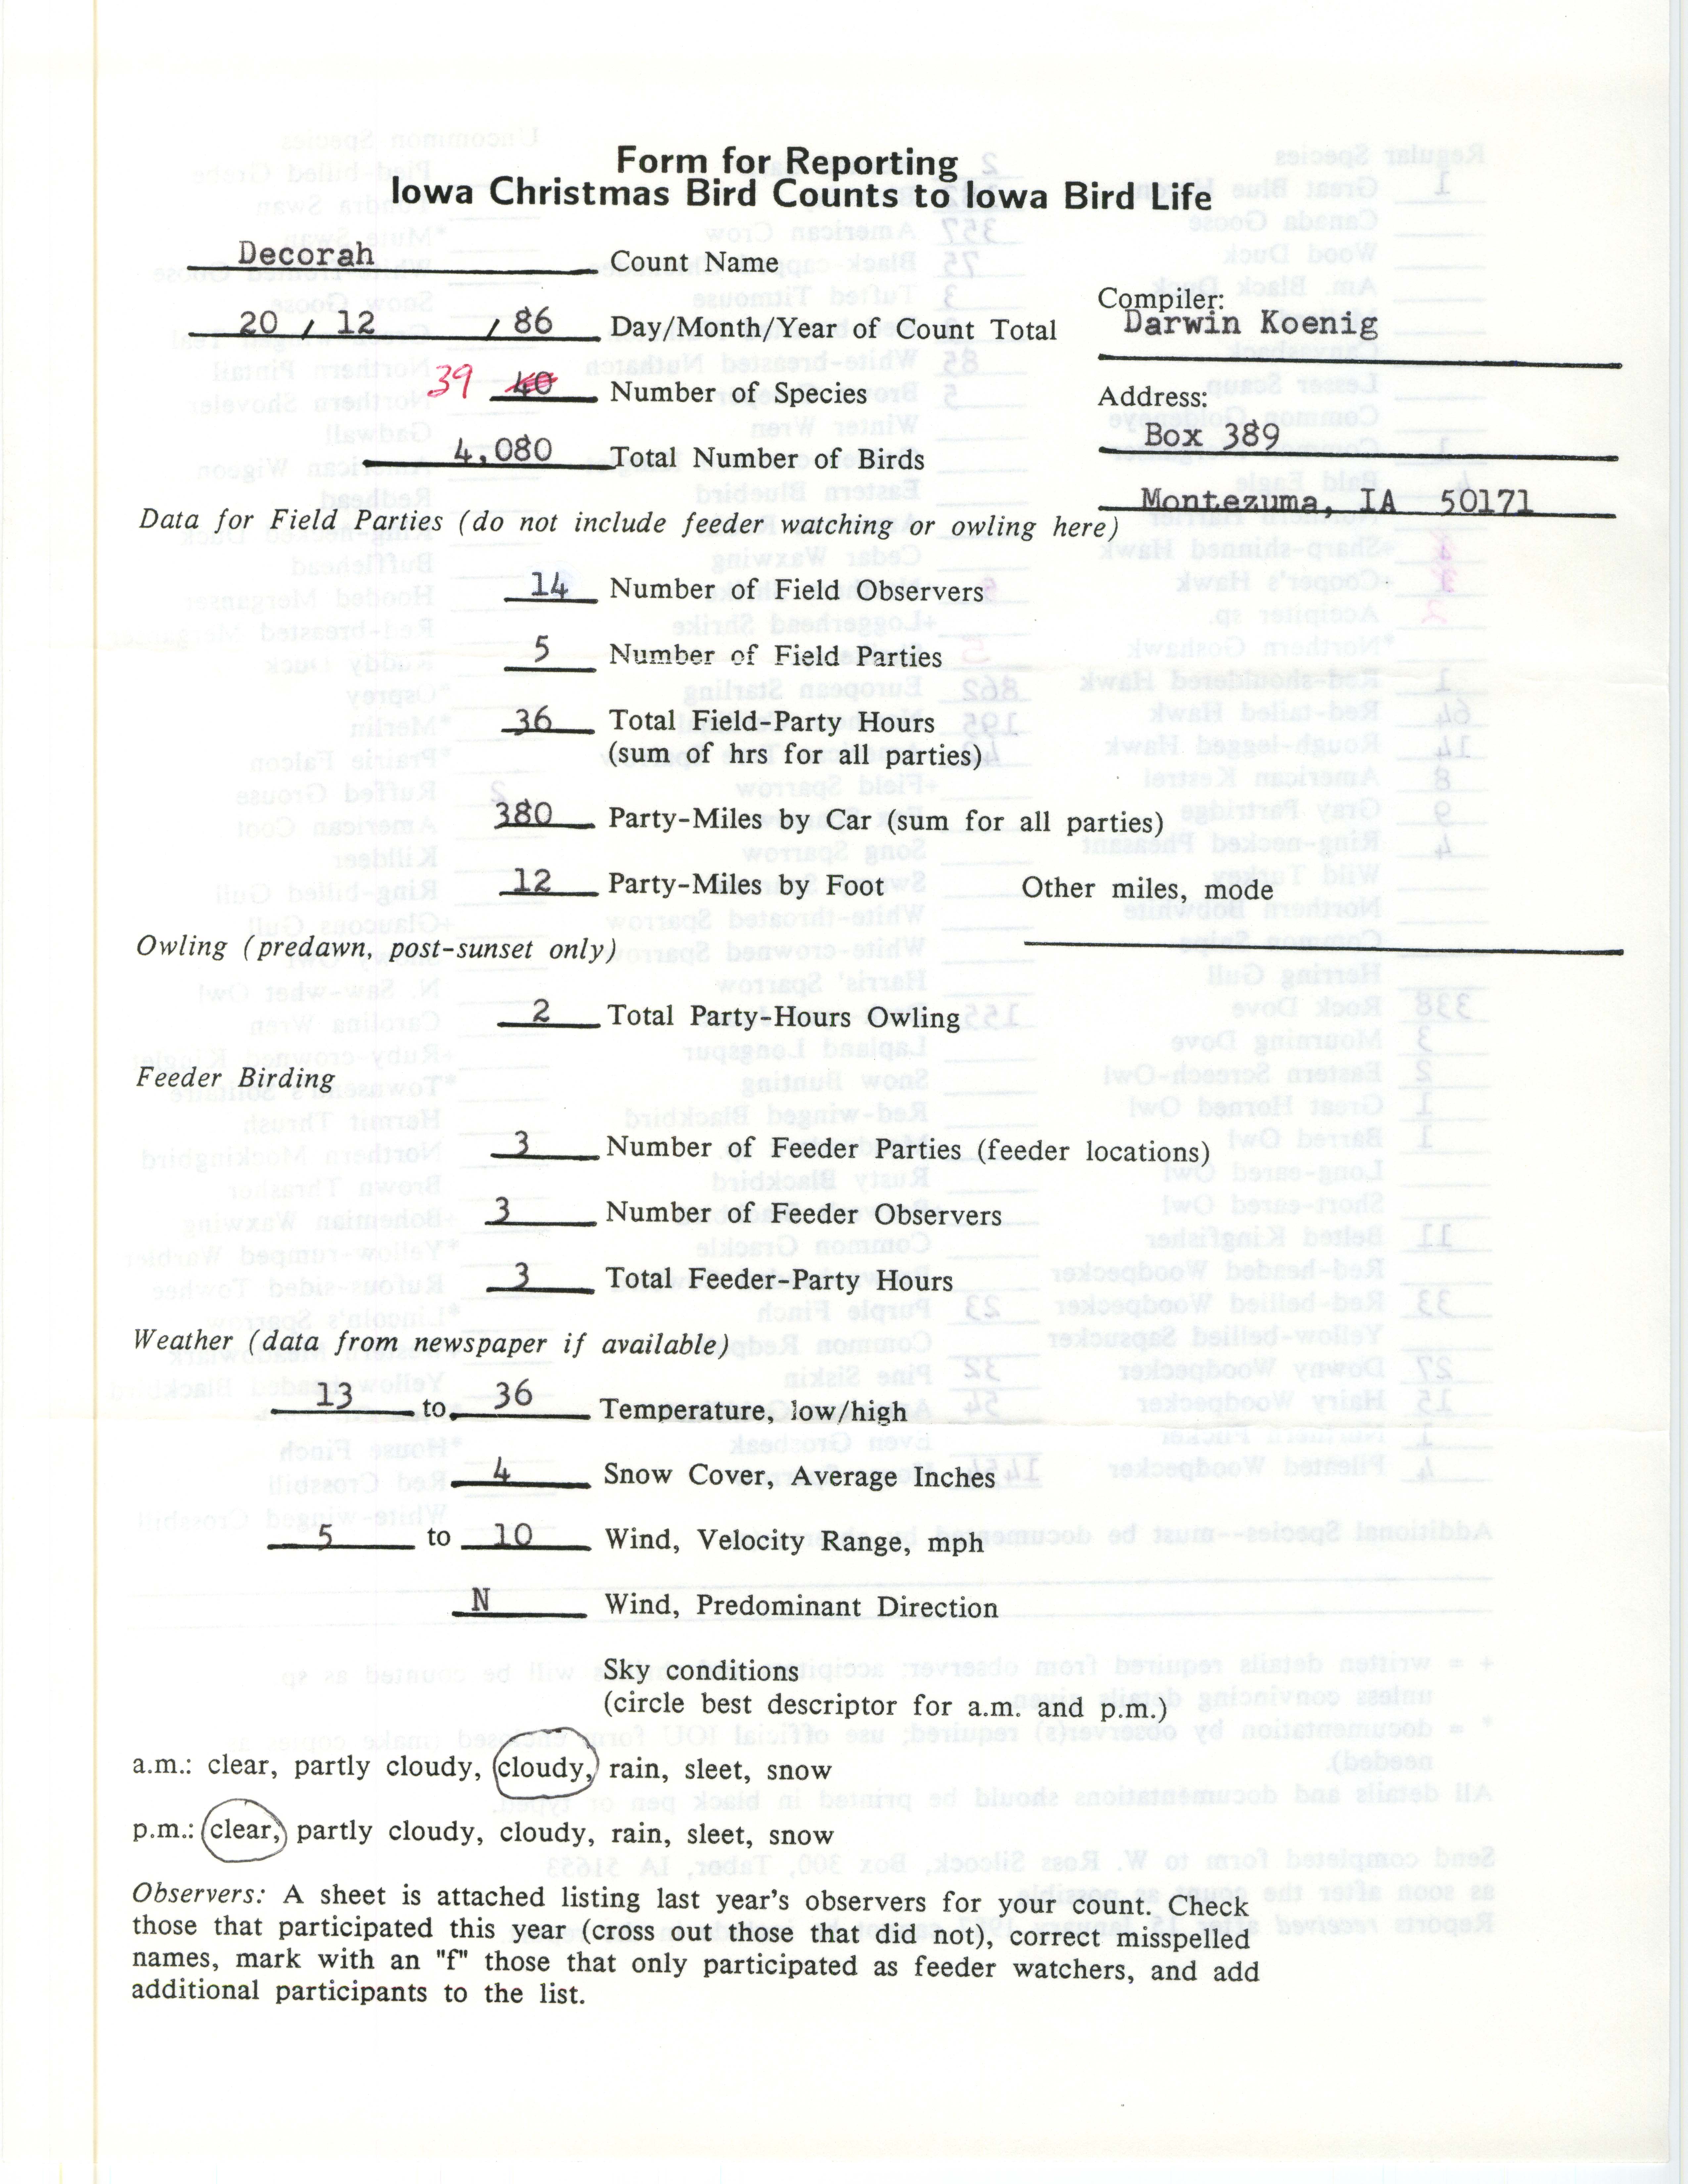 Form for reporting Iowa Christmas bird counts to Iowa Bird Life, Darwin Koenig, December 20, 1986